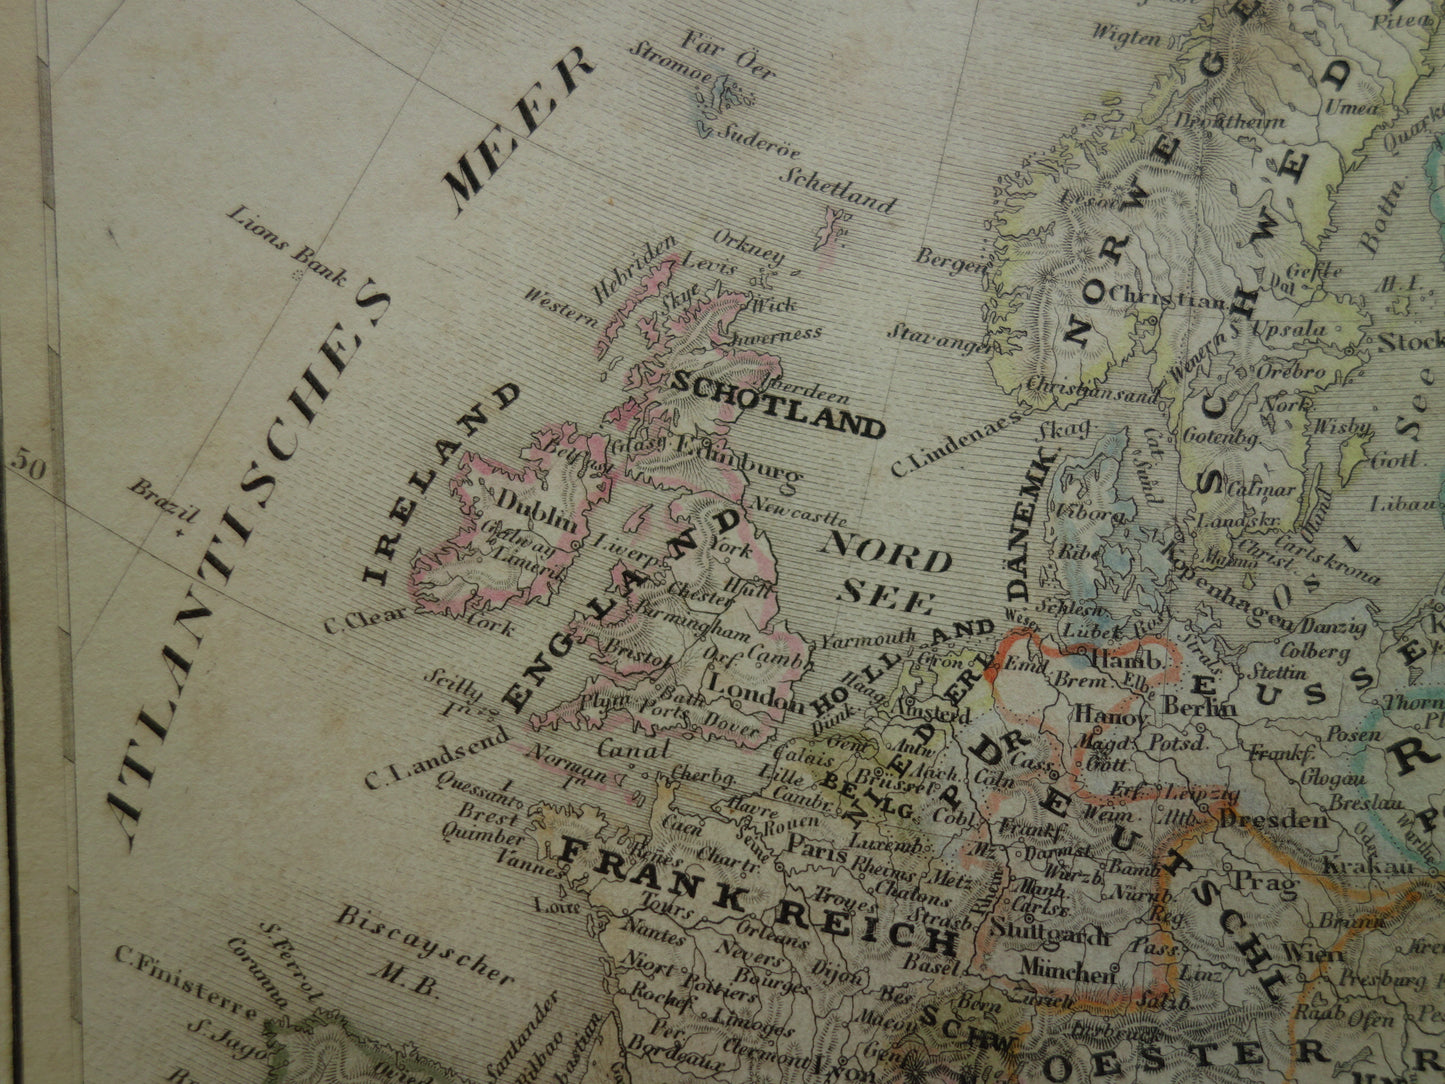 EUROPA oude kaart van Europa in 1849 originele antieke Duitse landkaart Duitsland Engeland Frankrijk vintage print continent